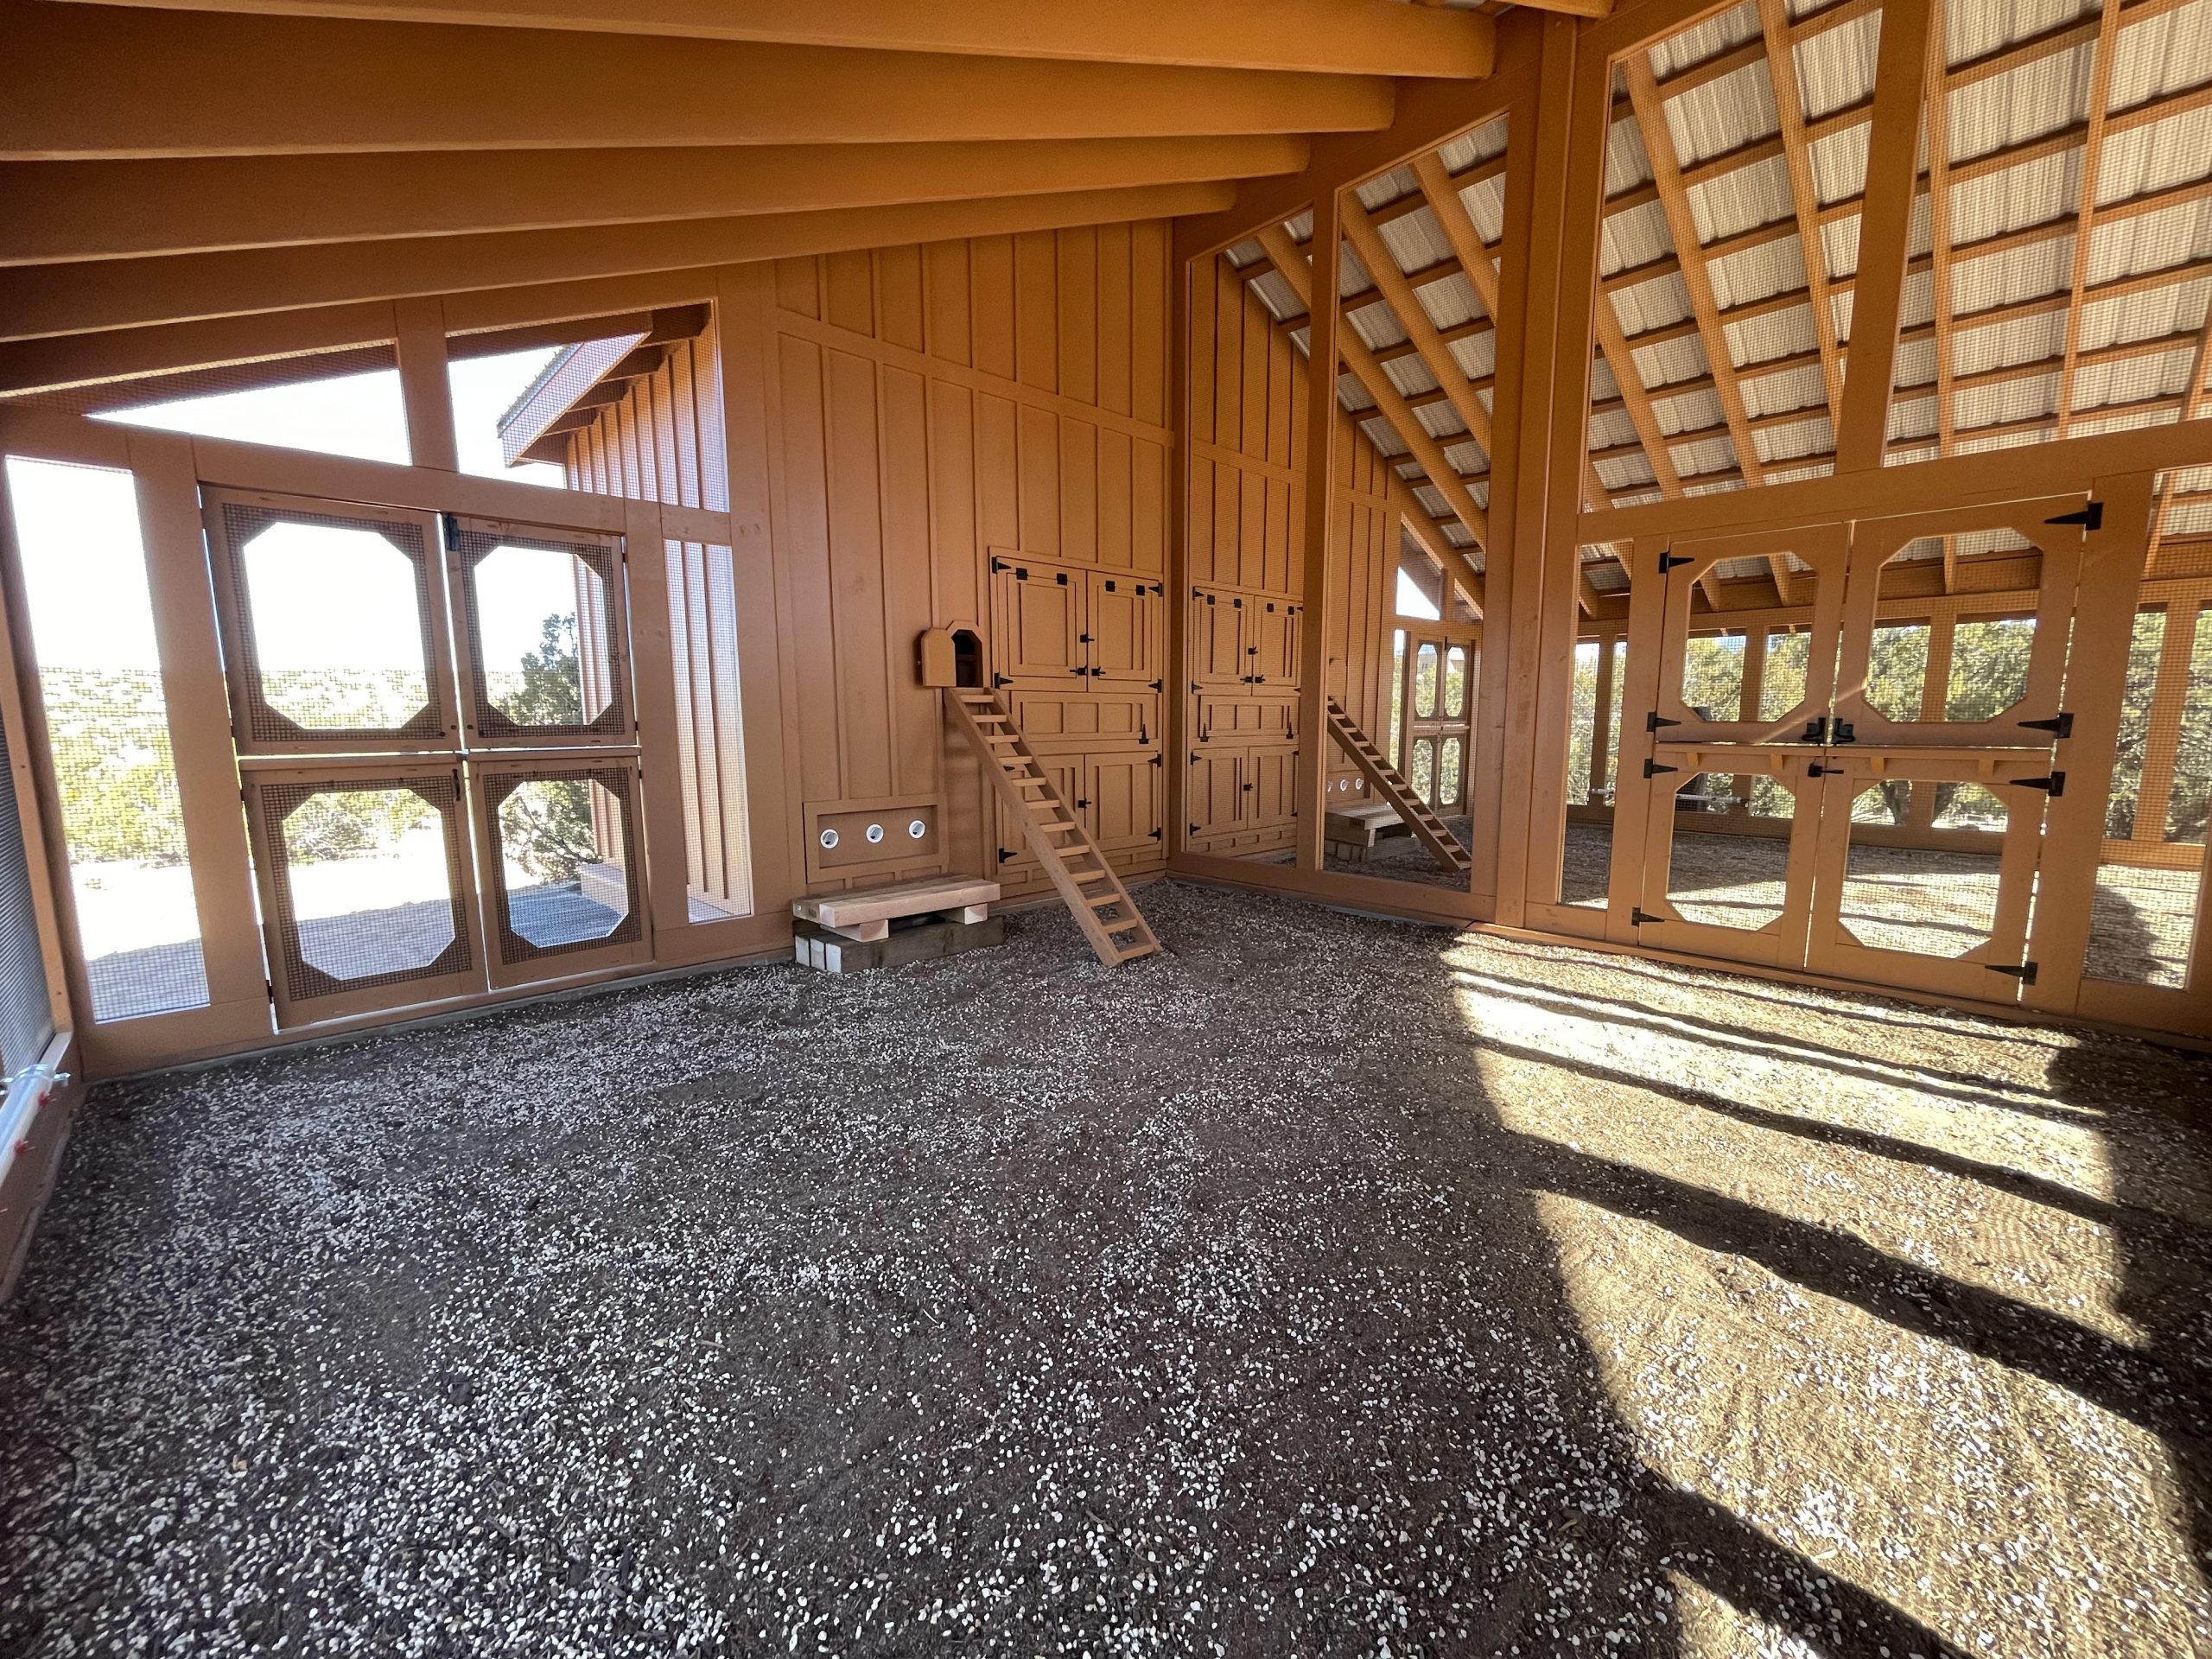 Interior of the run of a custom coop build in Santa Fe, NM